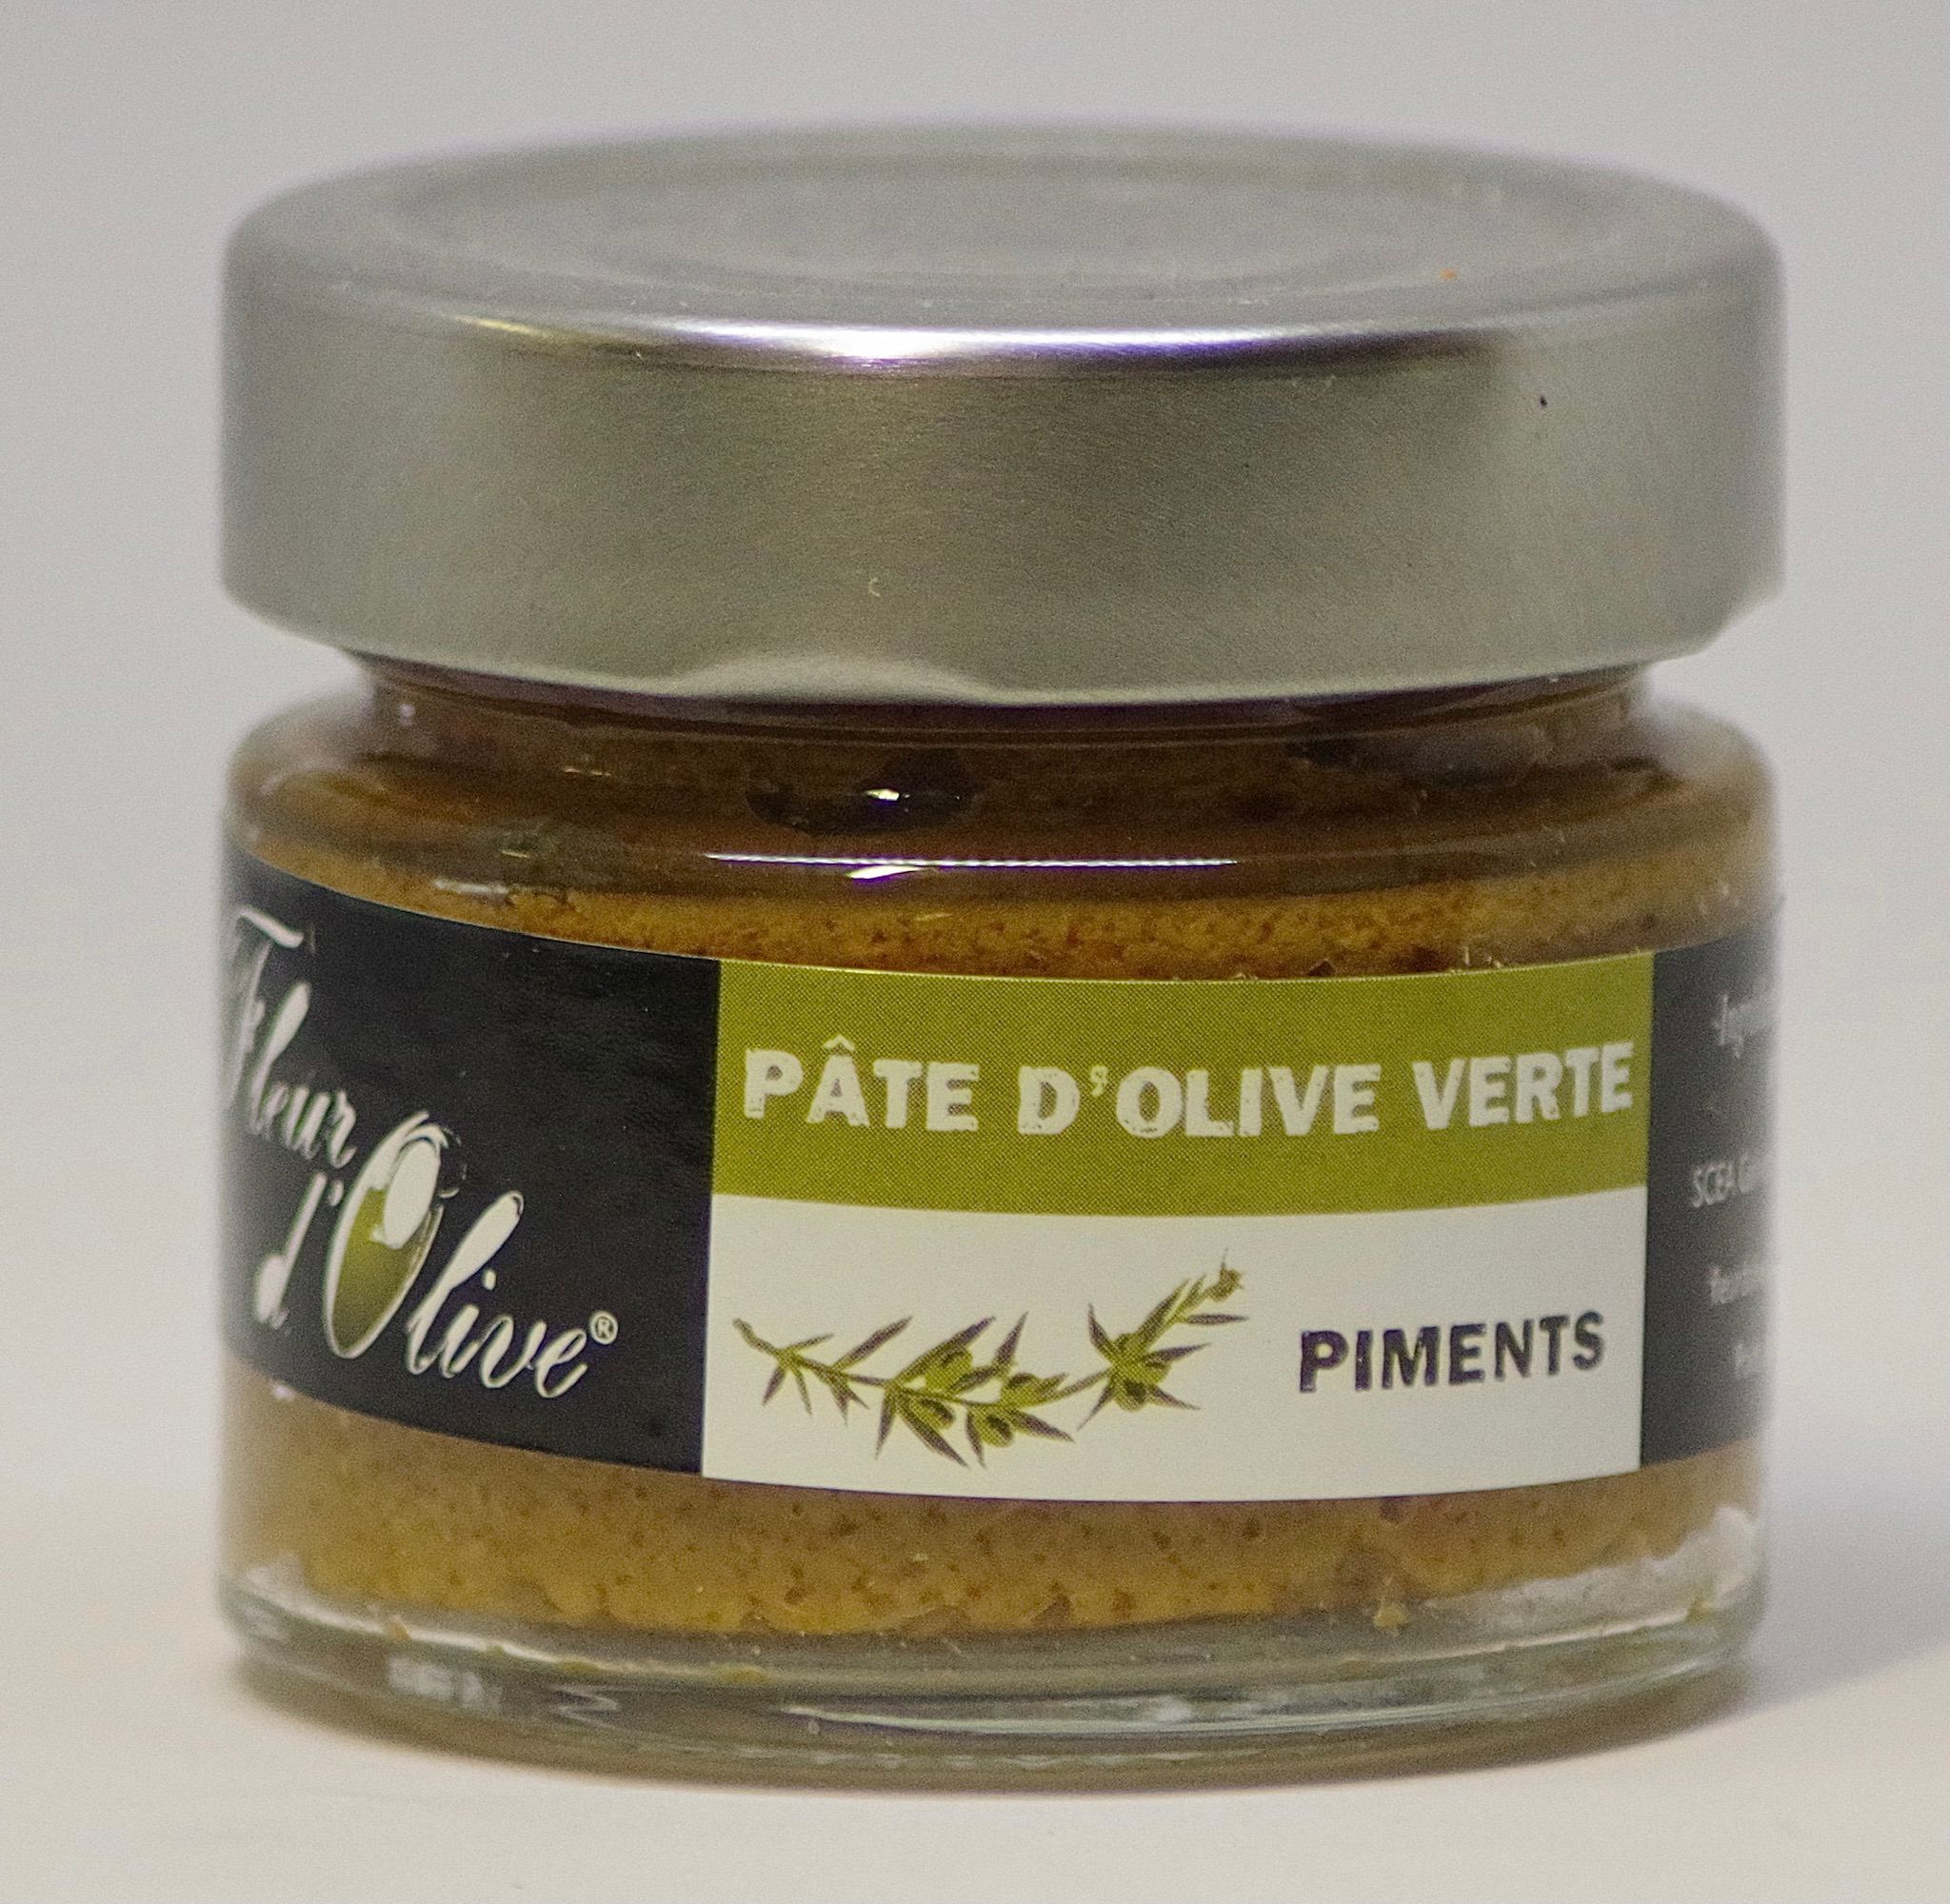 pate olives vertes et piments